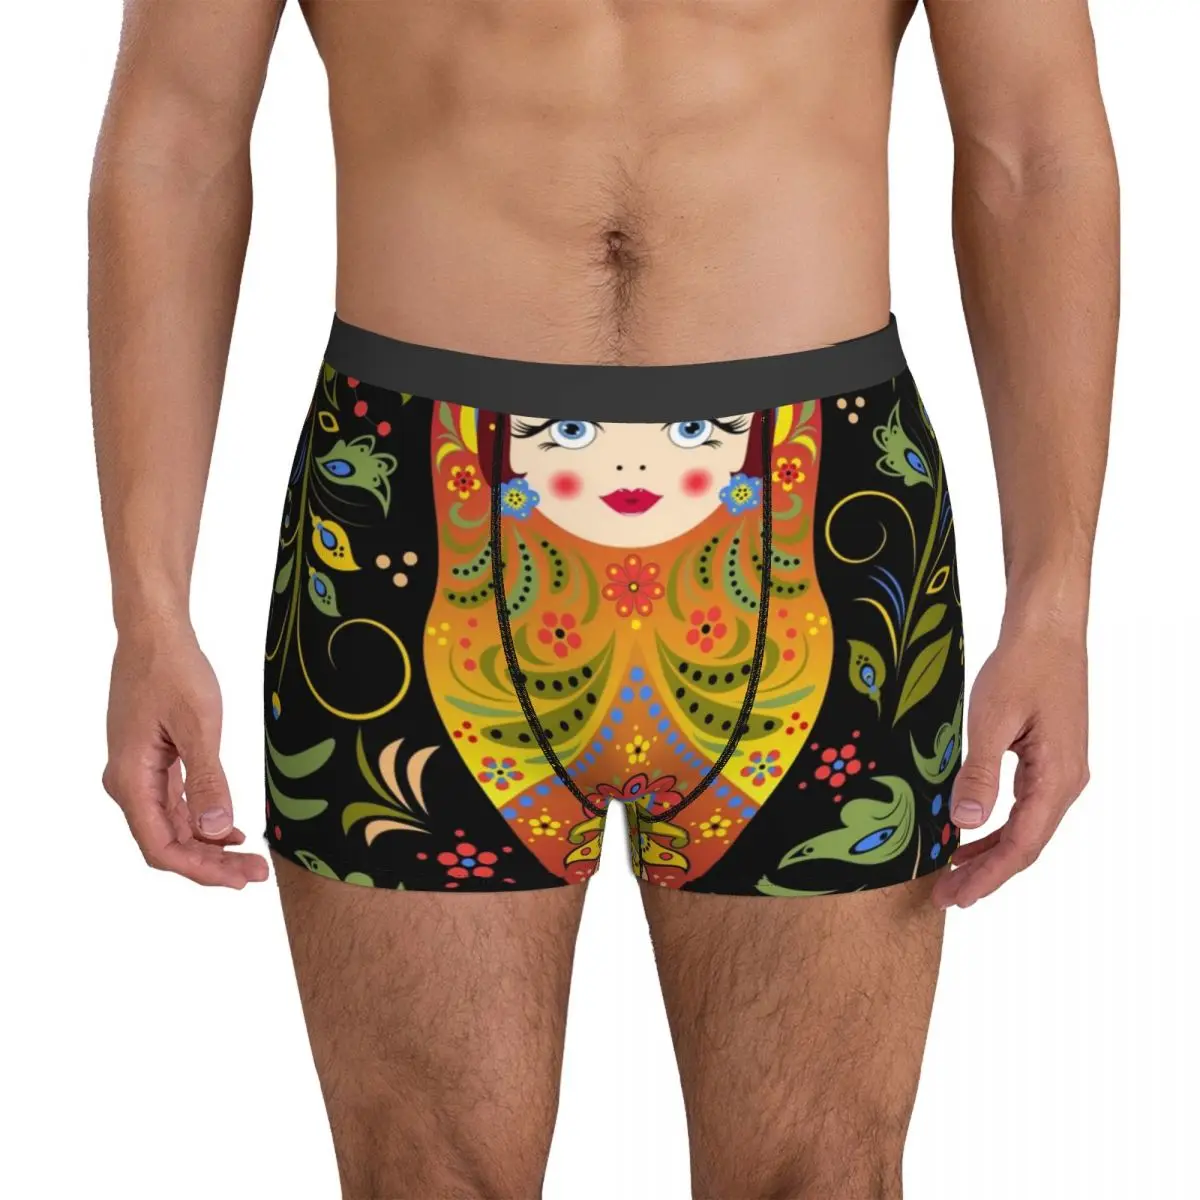 Russian Doll Underwear russian doll matryoshka Printed Boxer Shorts Hot Males Underpants Cute Shorts Briefs Birthday Present